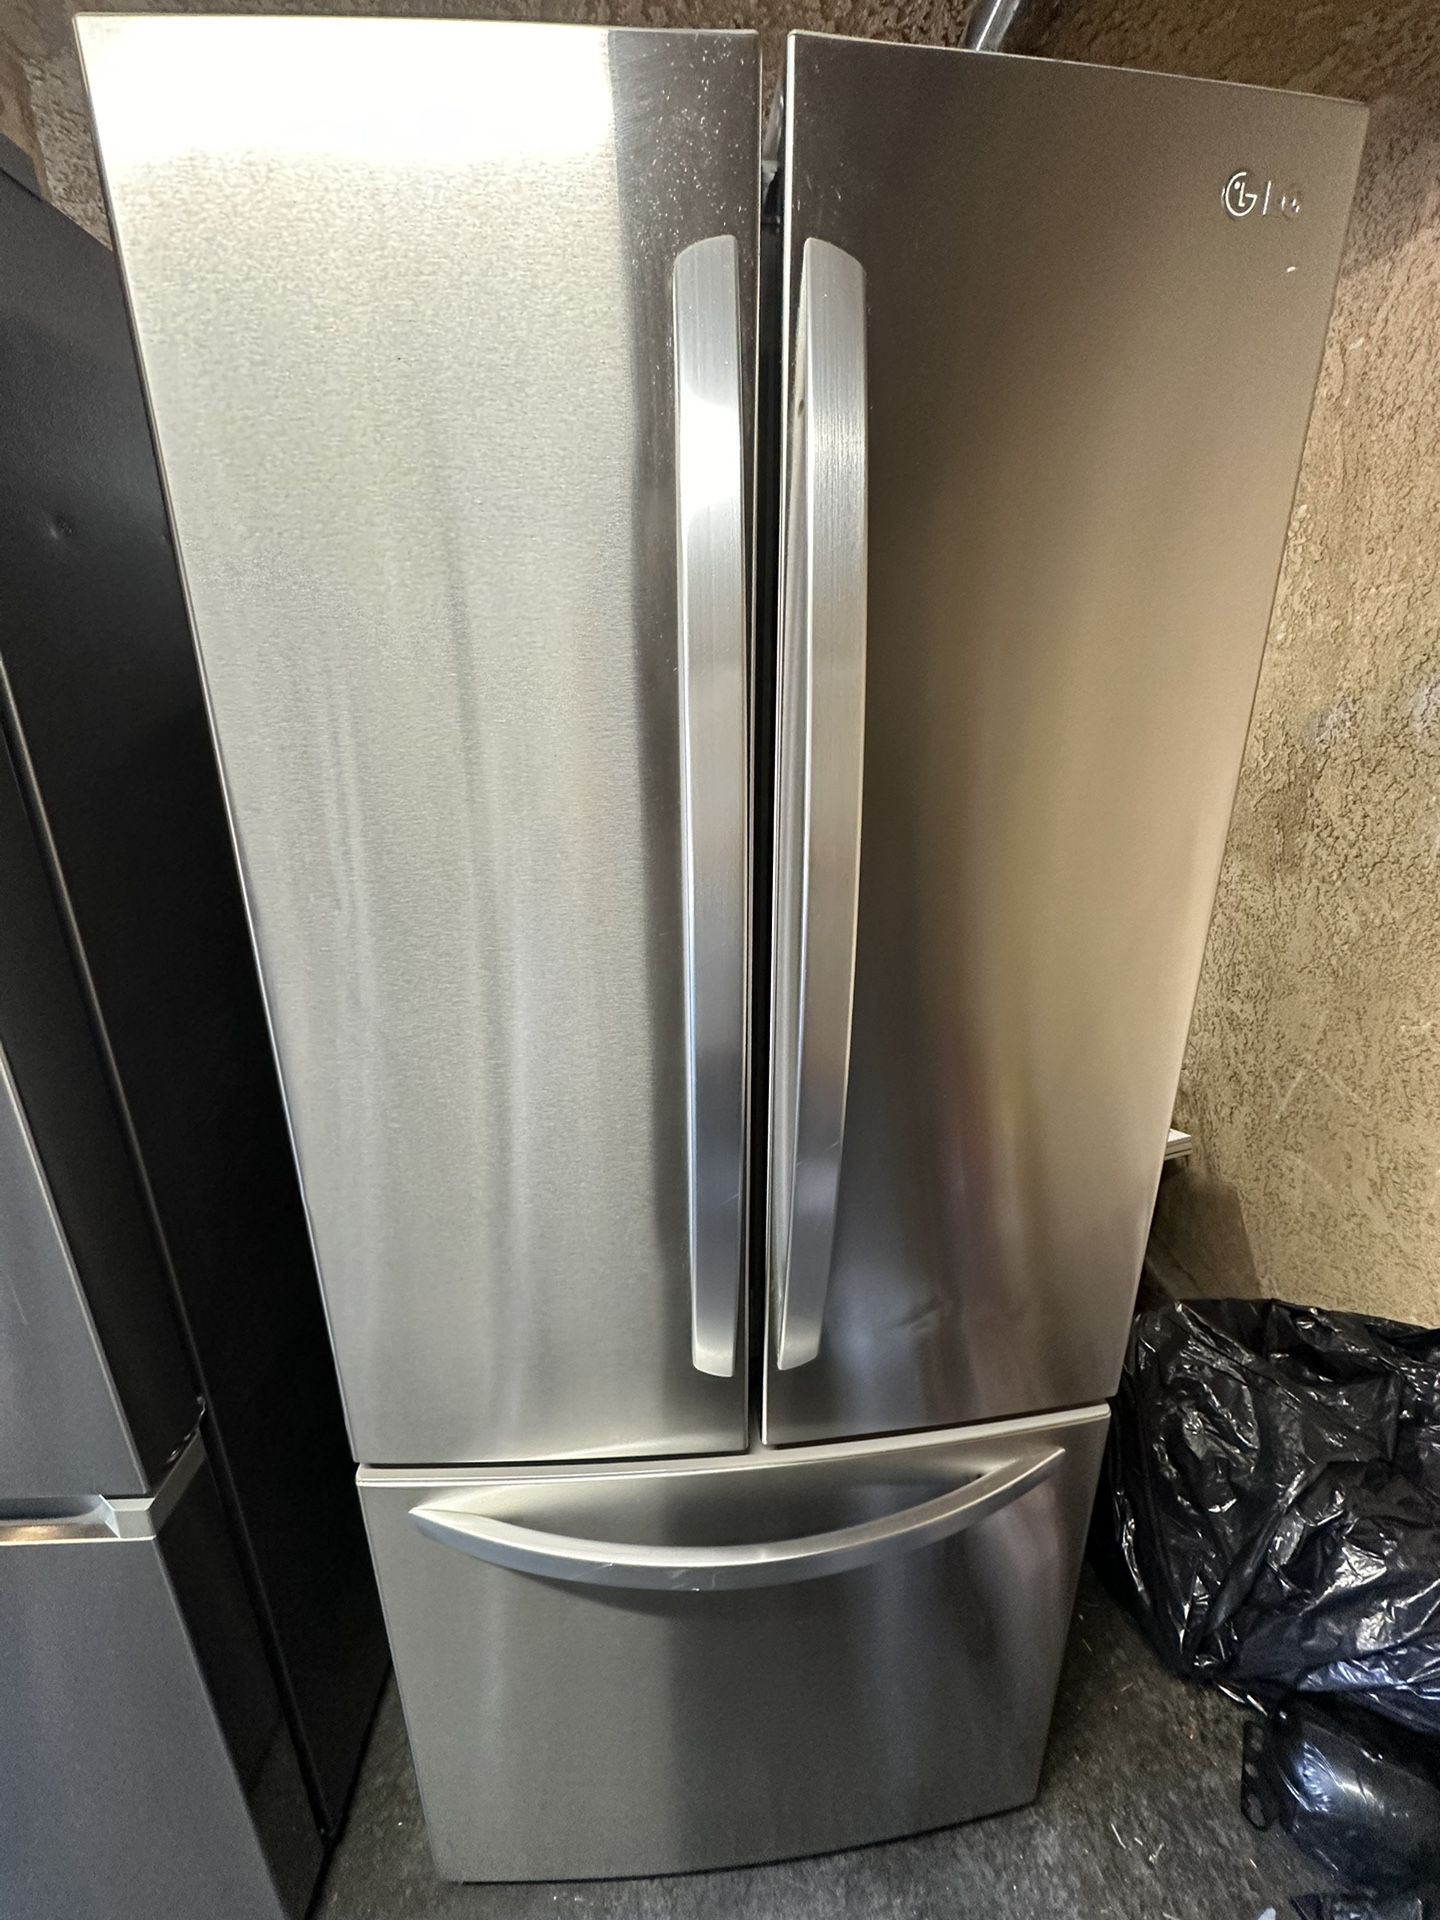 LG 3 Door Stainless Steel Refrigerator 30 Inch Wide 